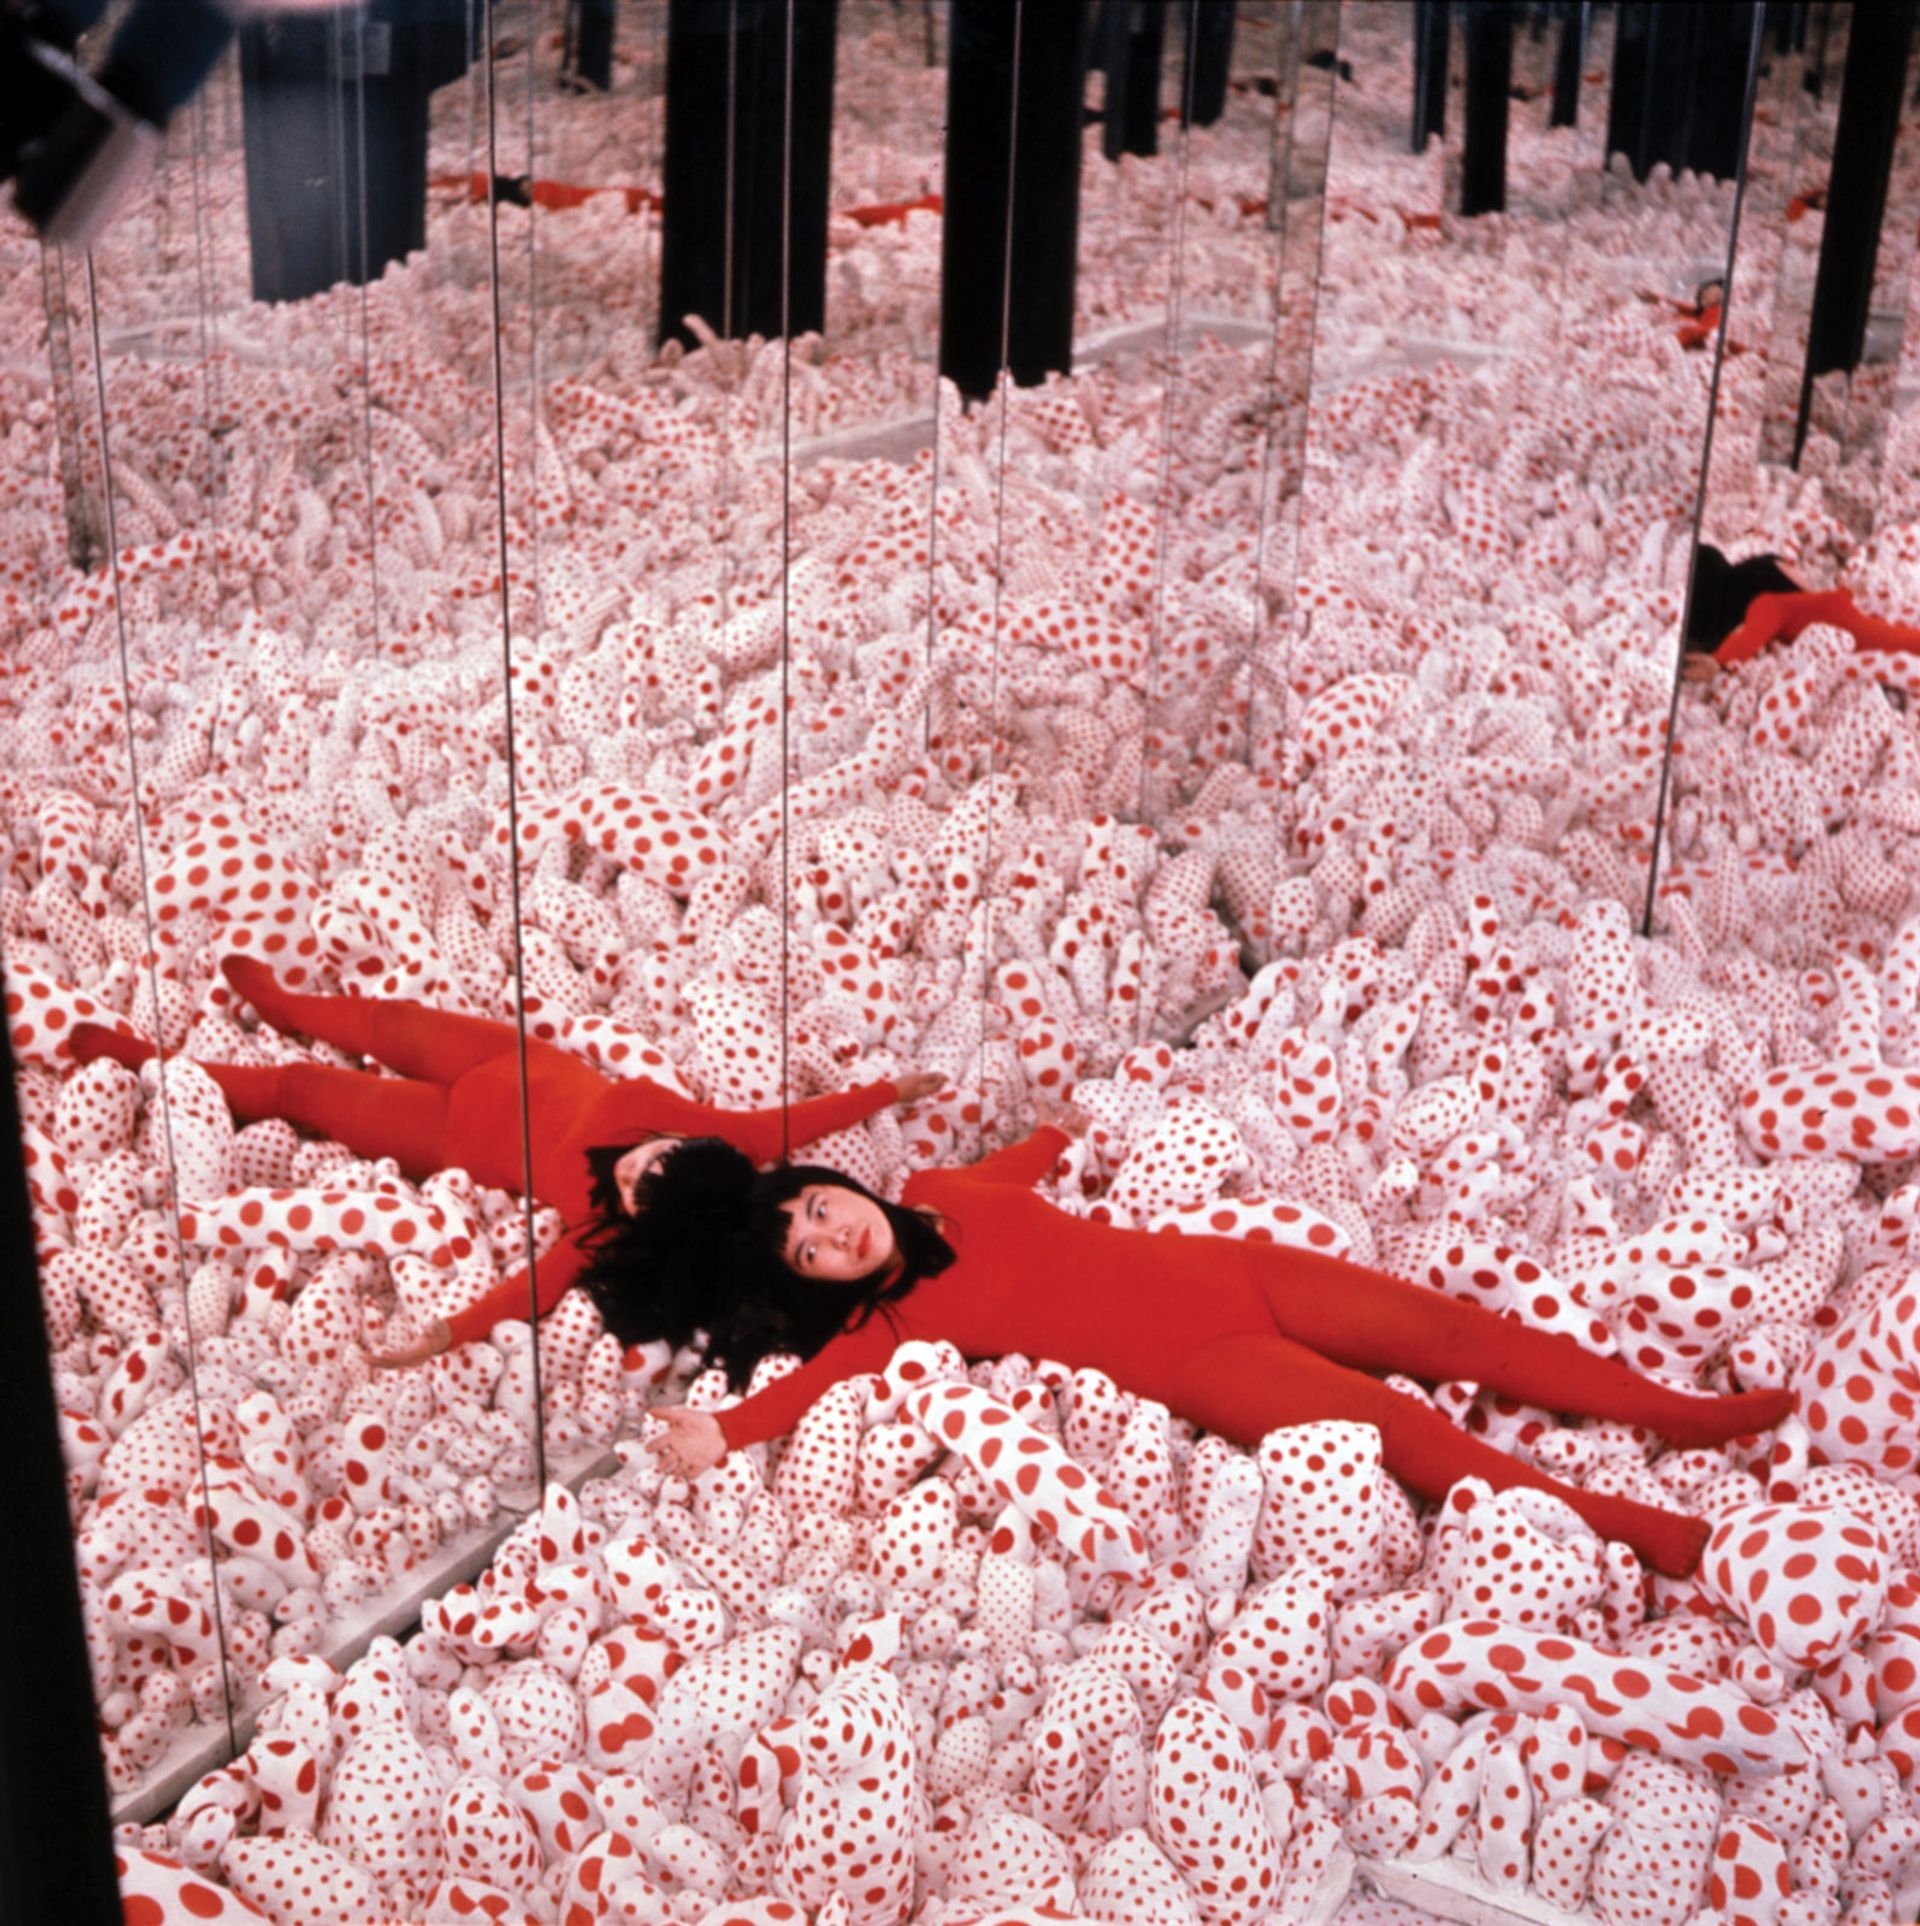 Yayoi Kusama in her breakthrough Infinity Mirror Room Phalli’s Field at the Castellane Gallery in New York in 1965 © Yayoi Kusama; Courtesy of Ota Fine Arts, Victoria Miro and David Zwirner; Photo: Eikoh Hosoe